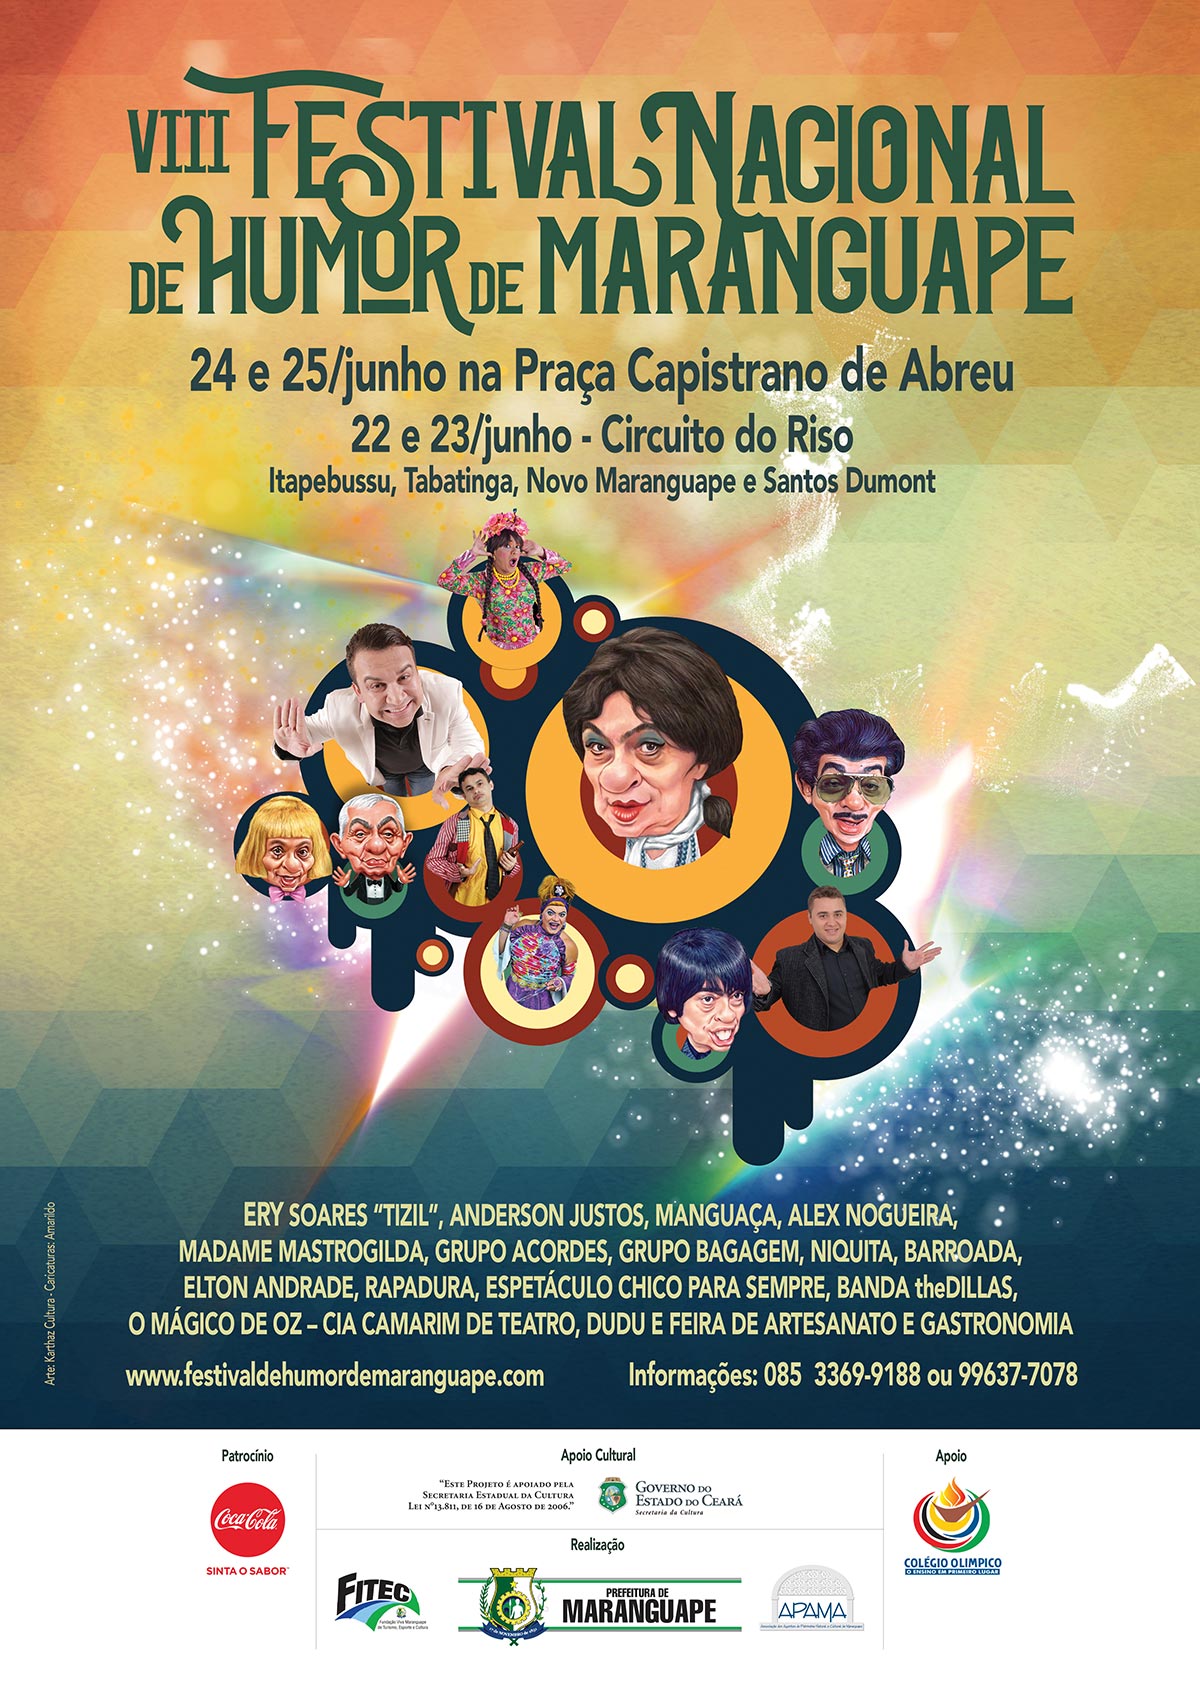 VIII Festival Nacional de Humor de Maranguape